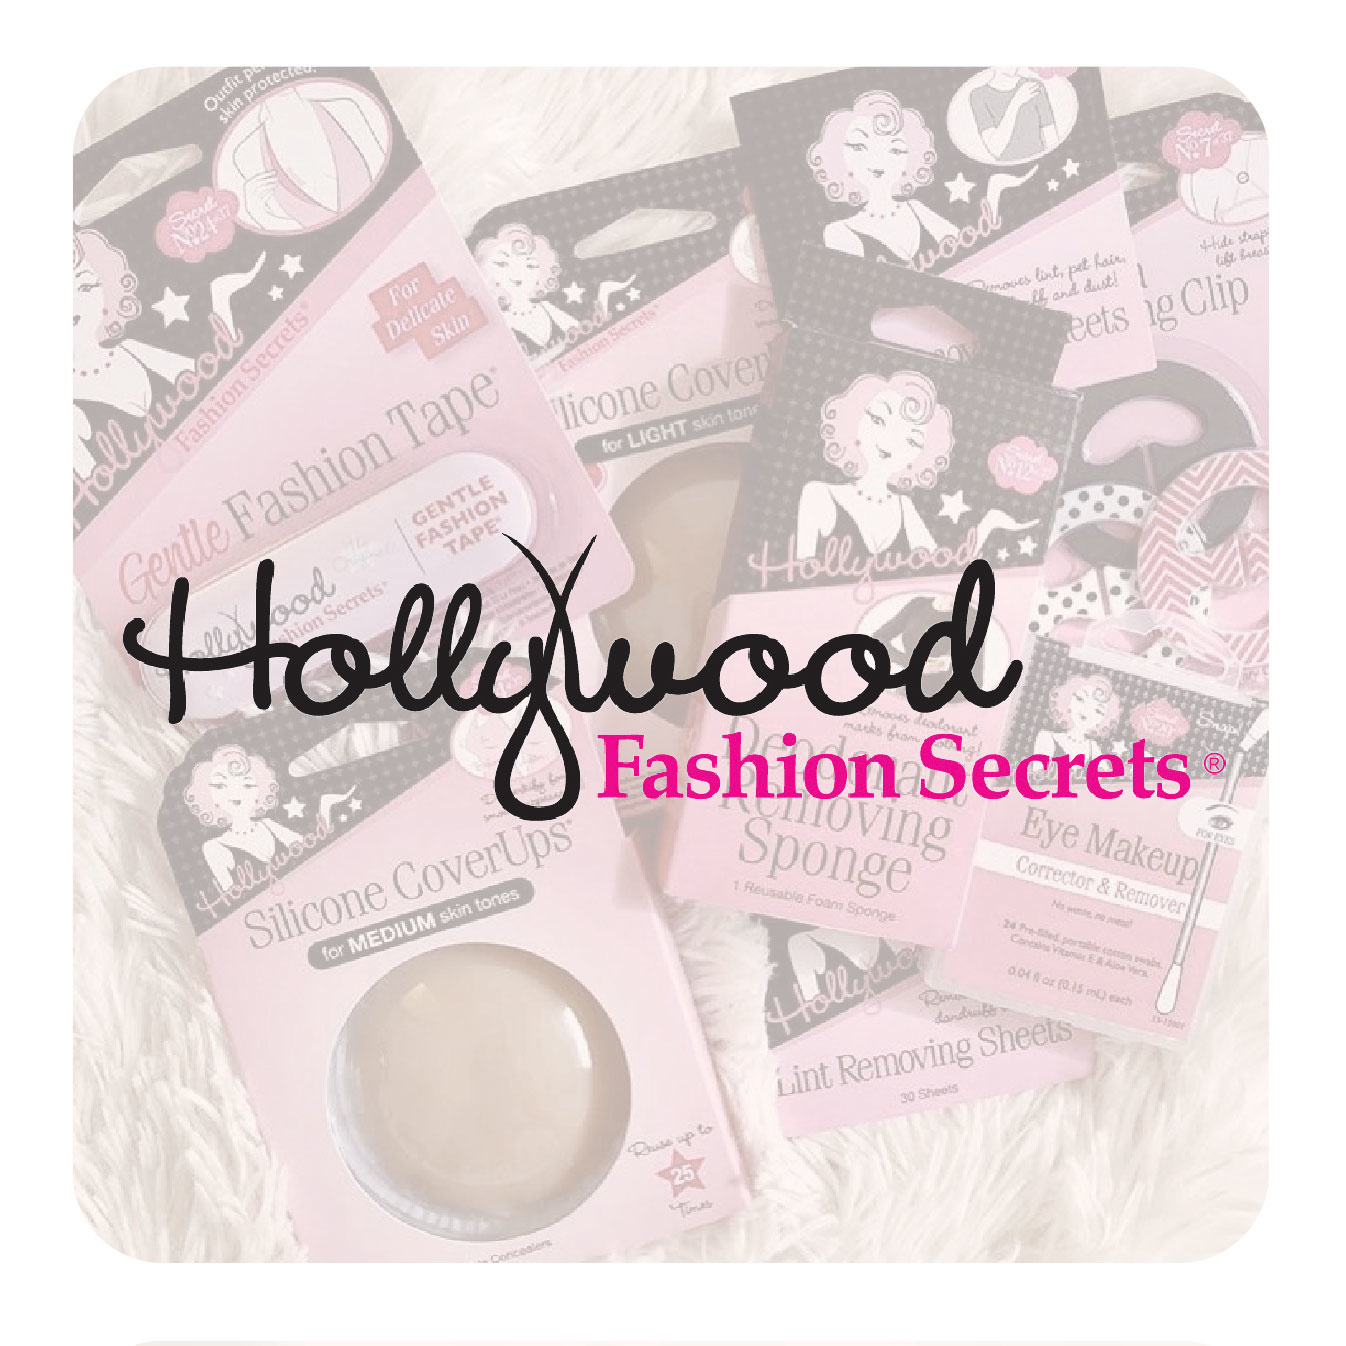 Hollywood Fashion Secrets - Allure Intimate Apparel